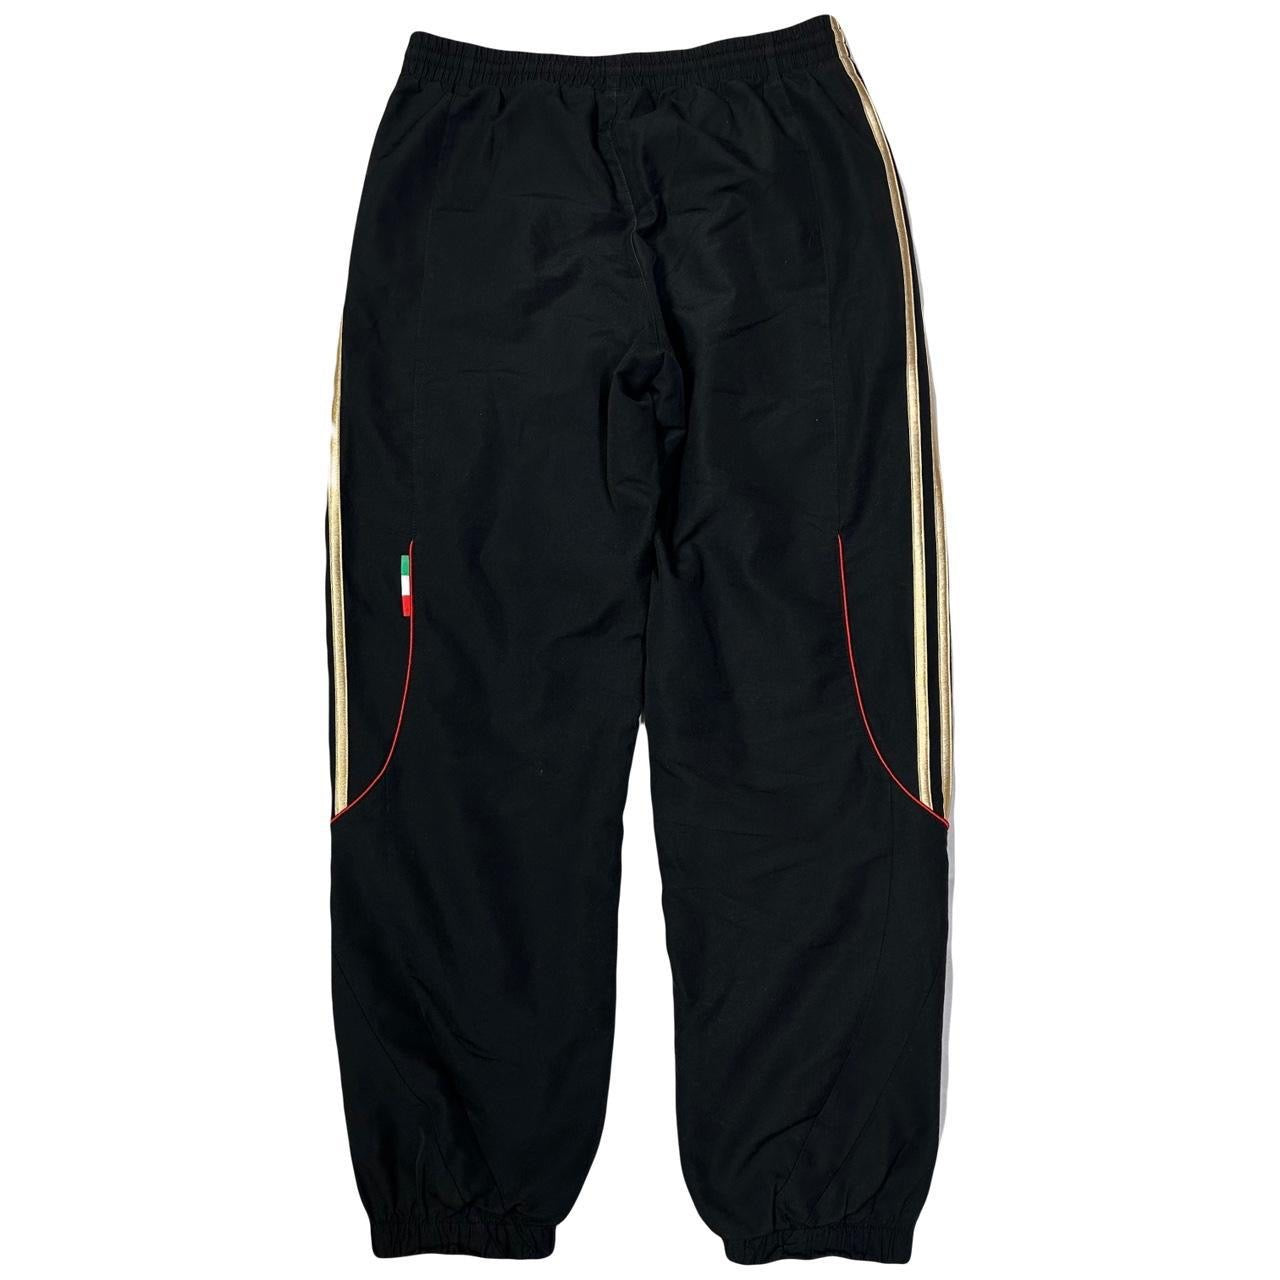 Adidas AC Milan 2010/12 Tracksuit In Black, Gold & Red ( M )